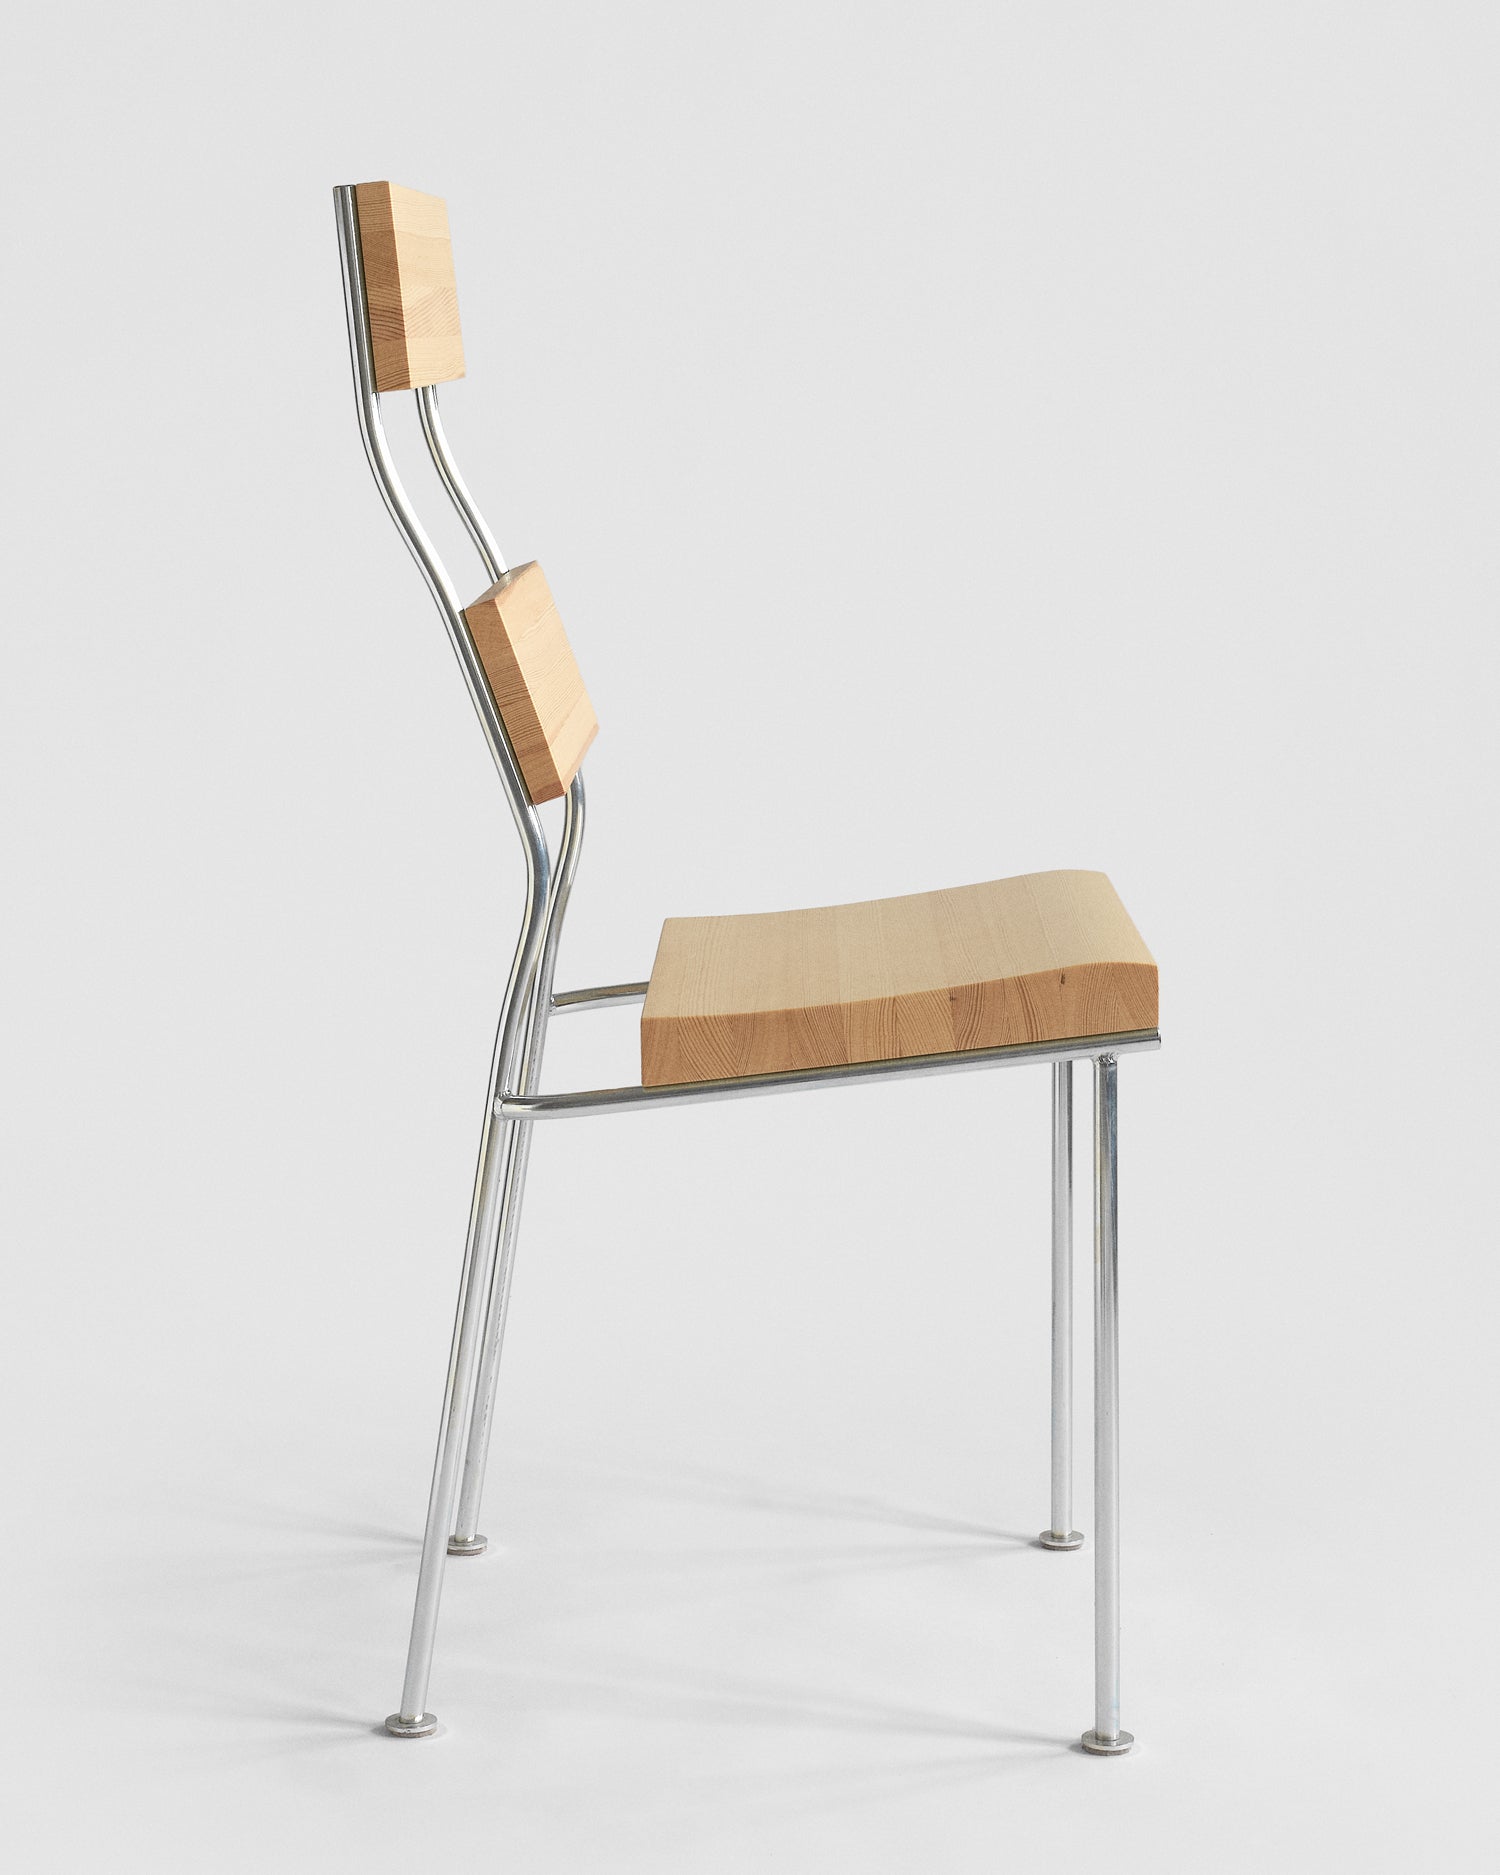 Töreboda Chair / Electroplated